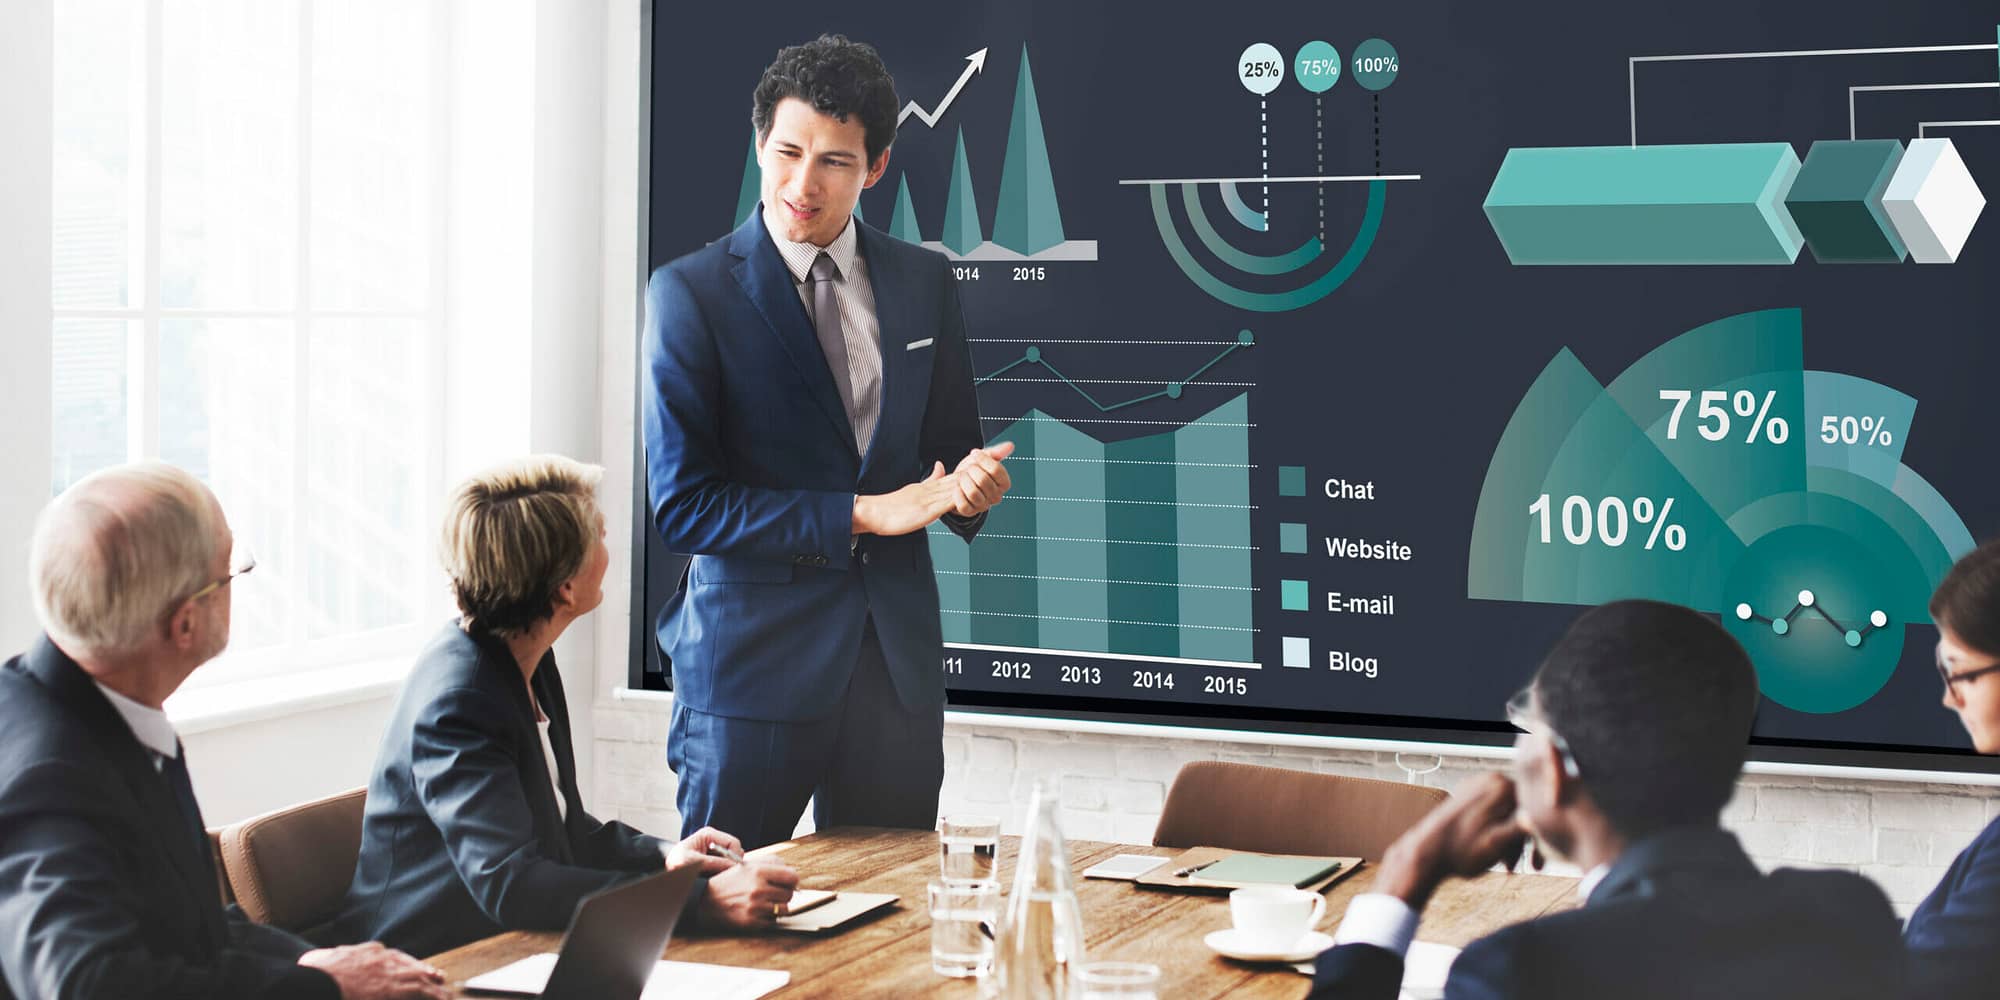 Data Analysis Marketing Business Report Concept